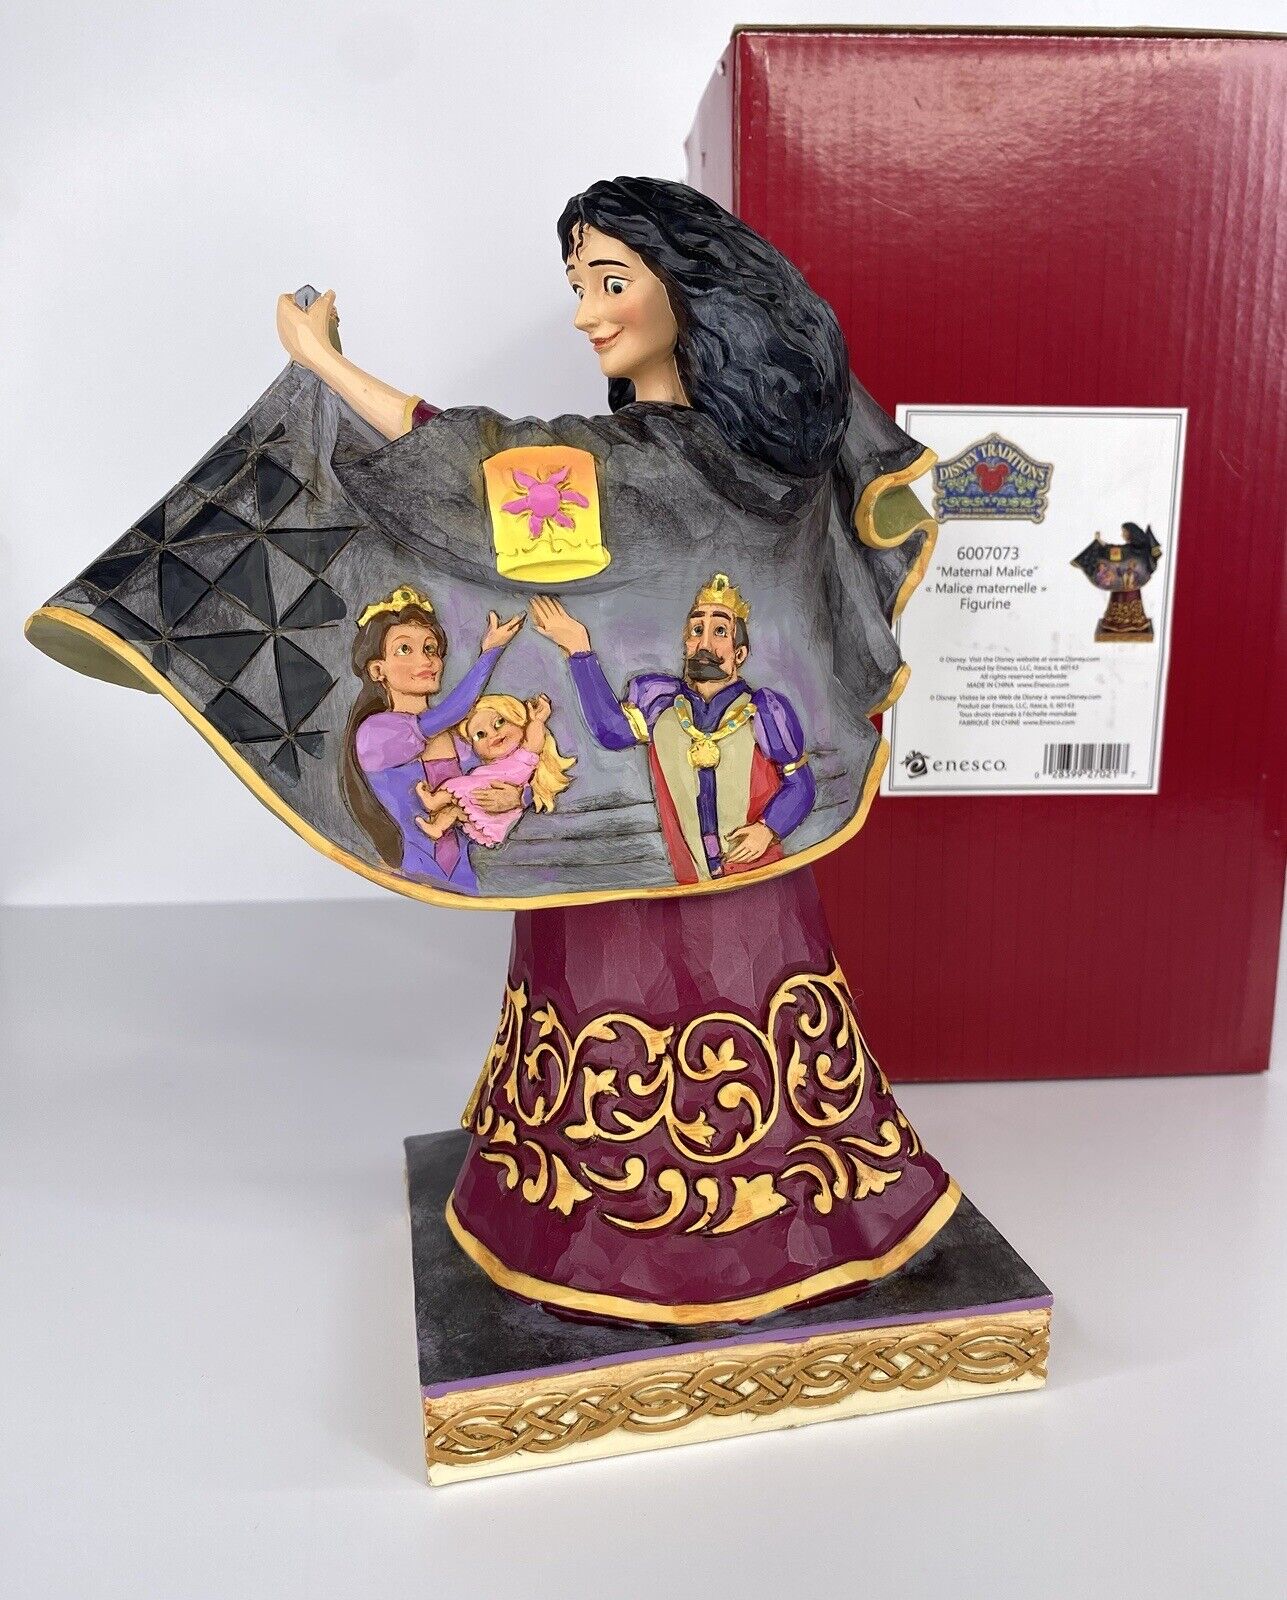 Disney Traditions Jim Shore Tangled Rapunzel's Mother Gothel Figurine 6007073